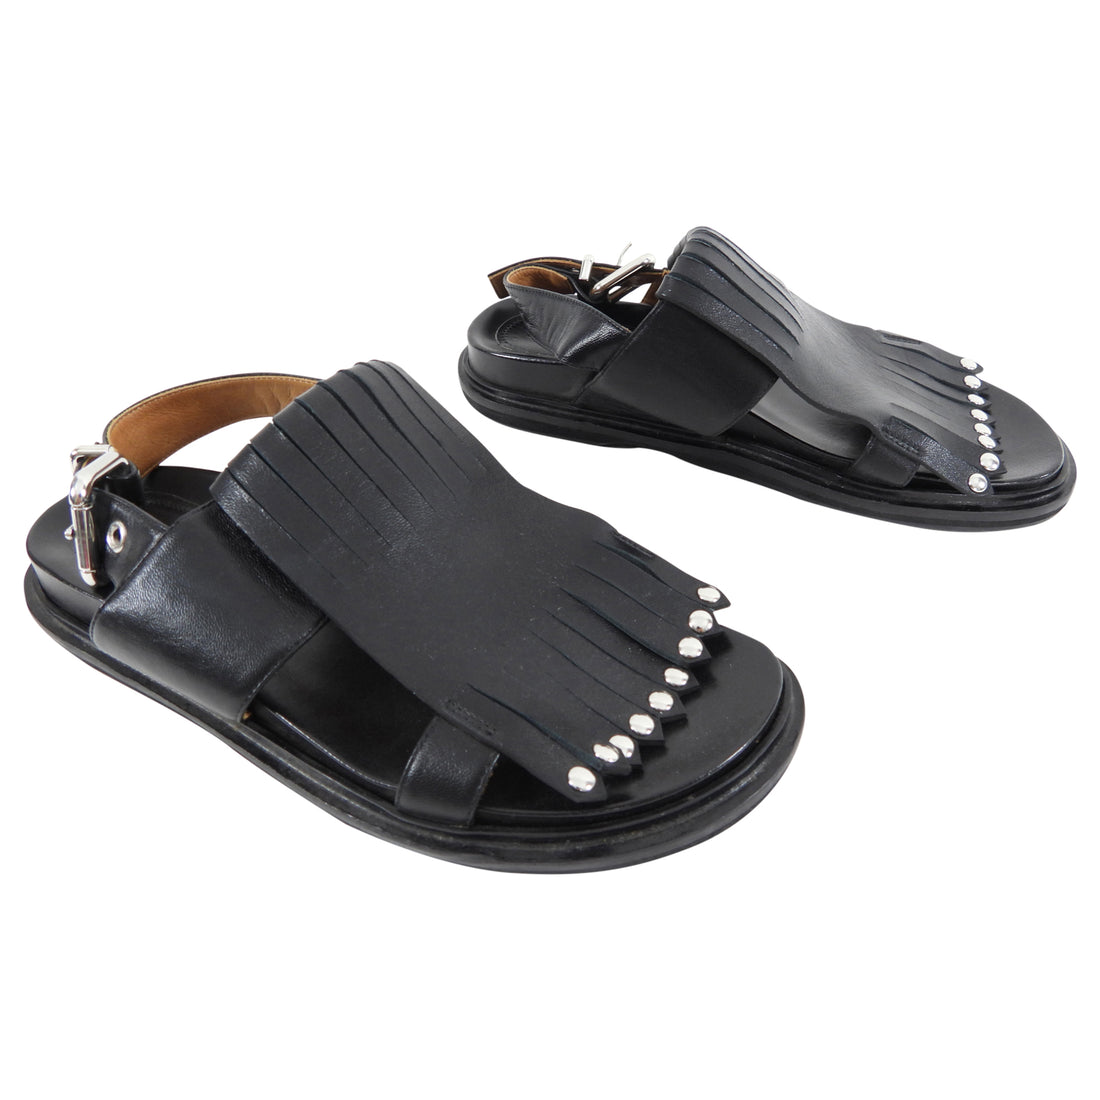 Marni Fringe Studded Black Leather Flat Sandals - 38 / 8